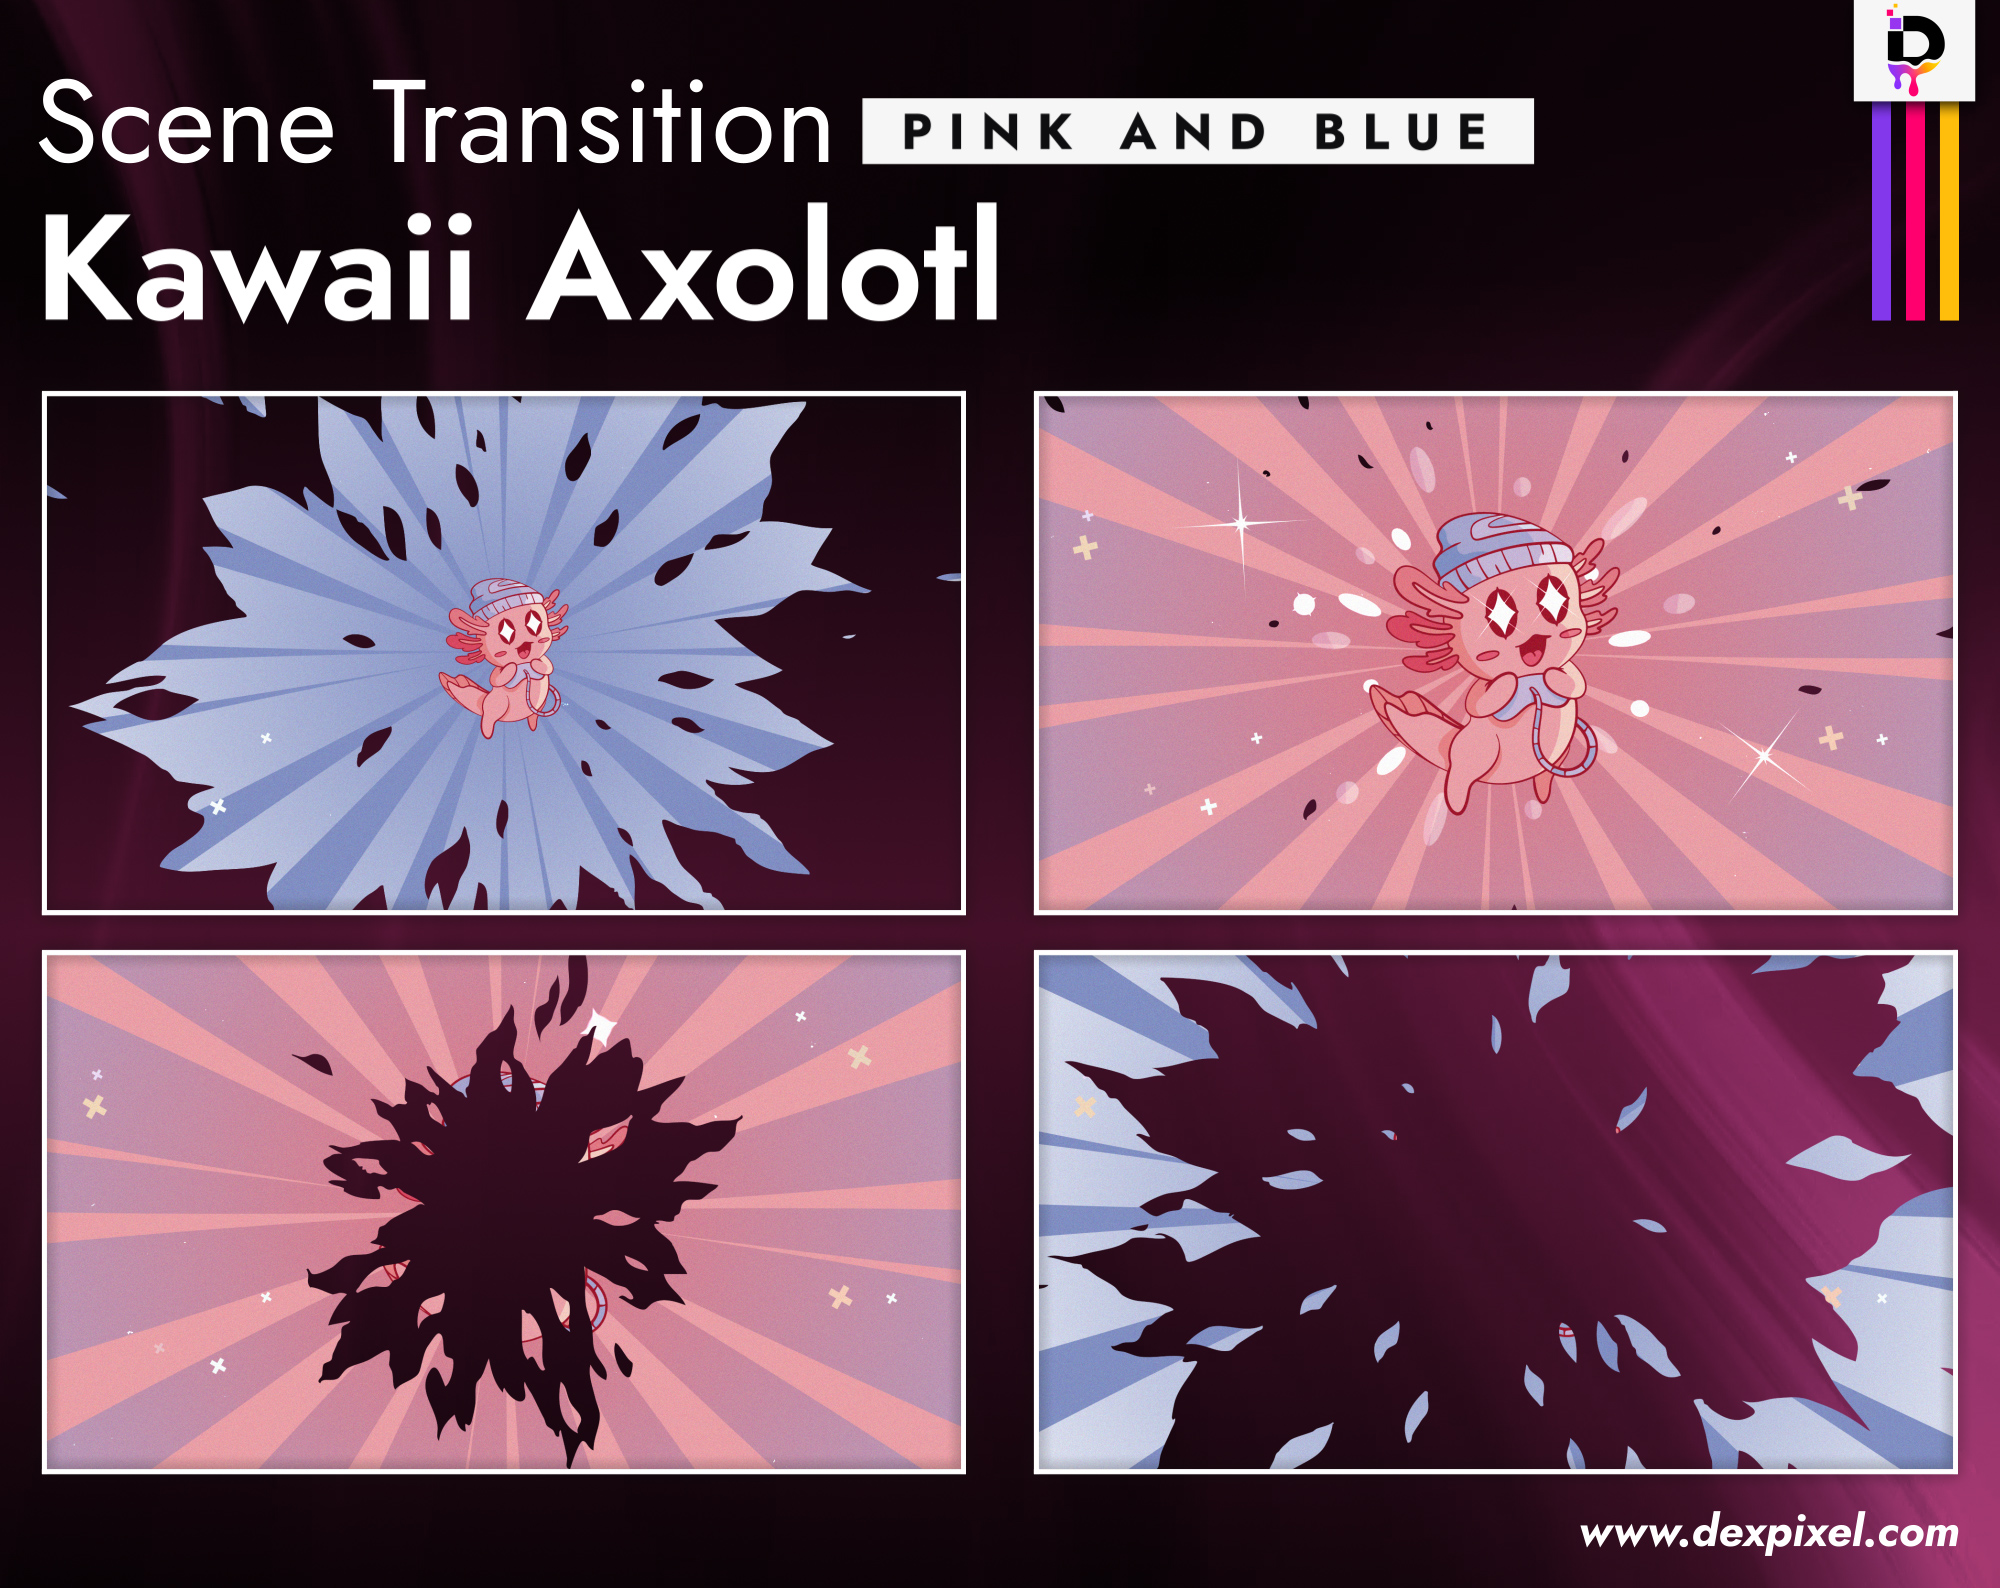 Scene Transition Dexpixel Thumbnail Kawaii Axolotl Pink And Blue